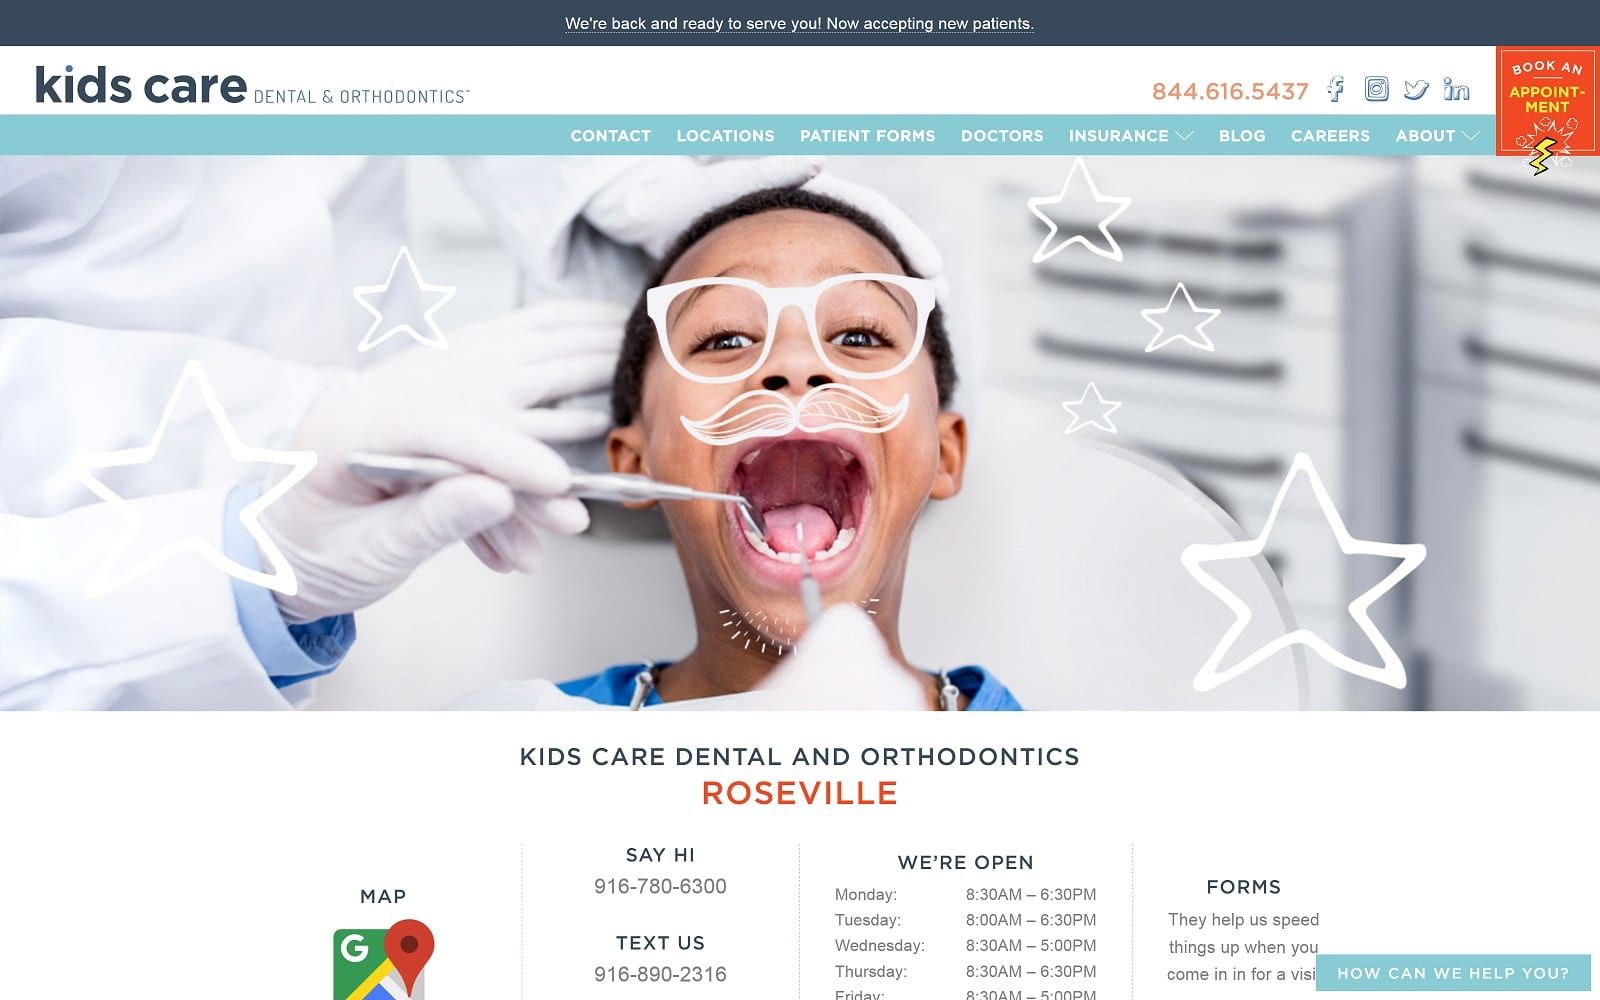 The screenshot of kids care dental & orthodontics - roseville kidscaredental. Com/locations/roseville website